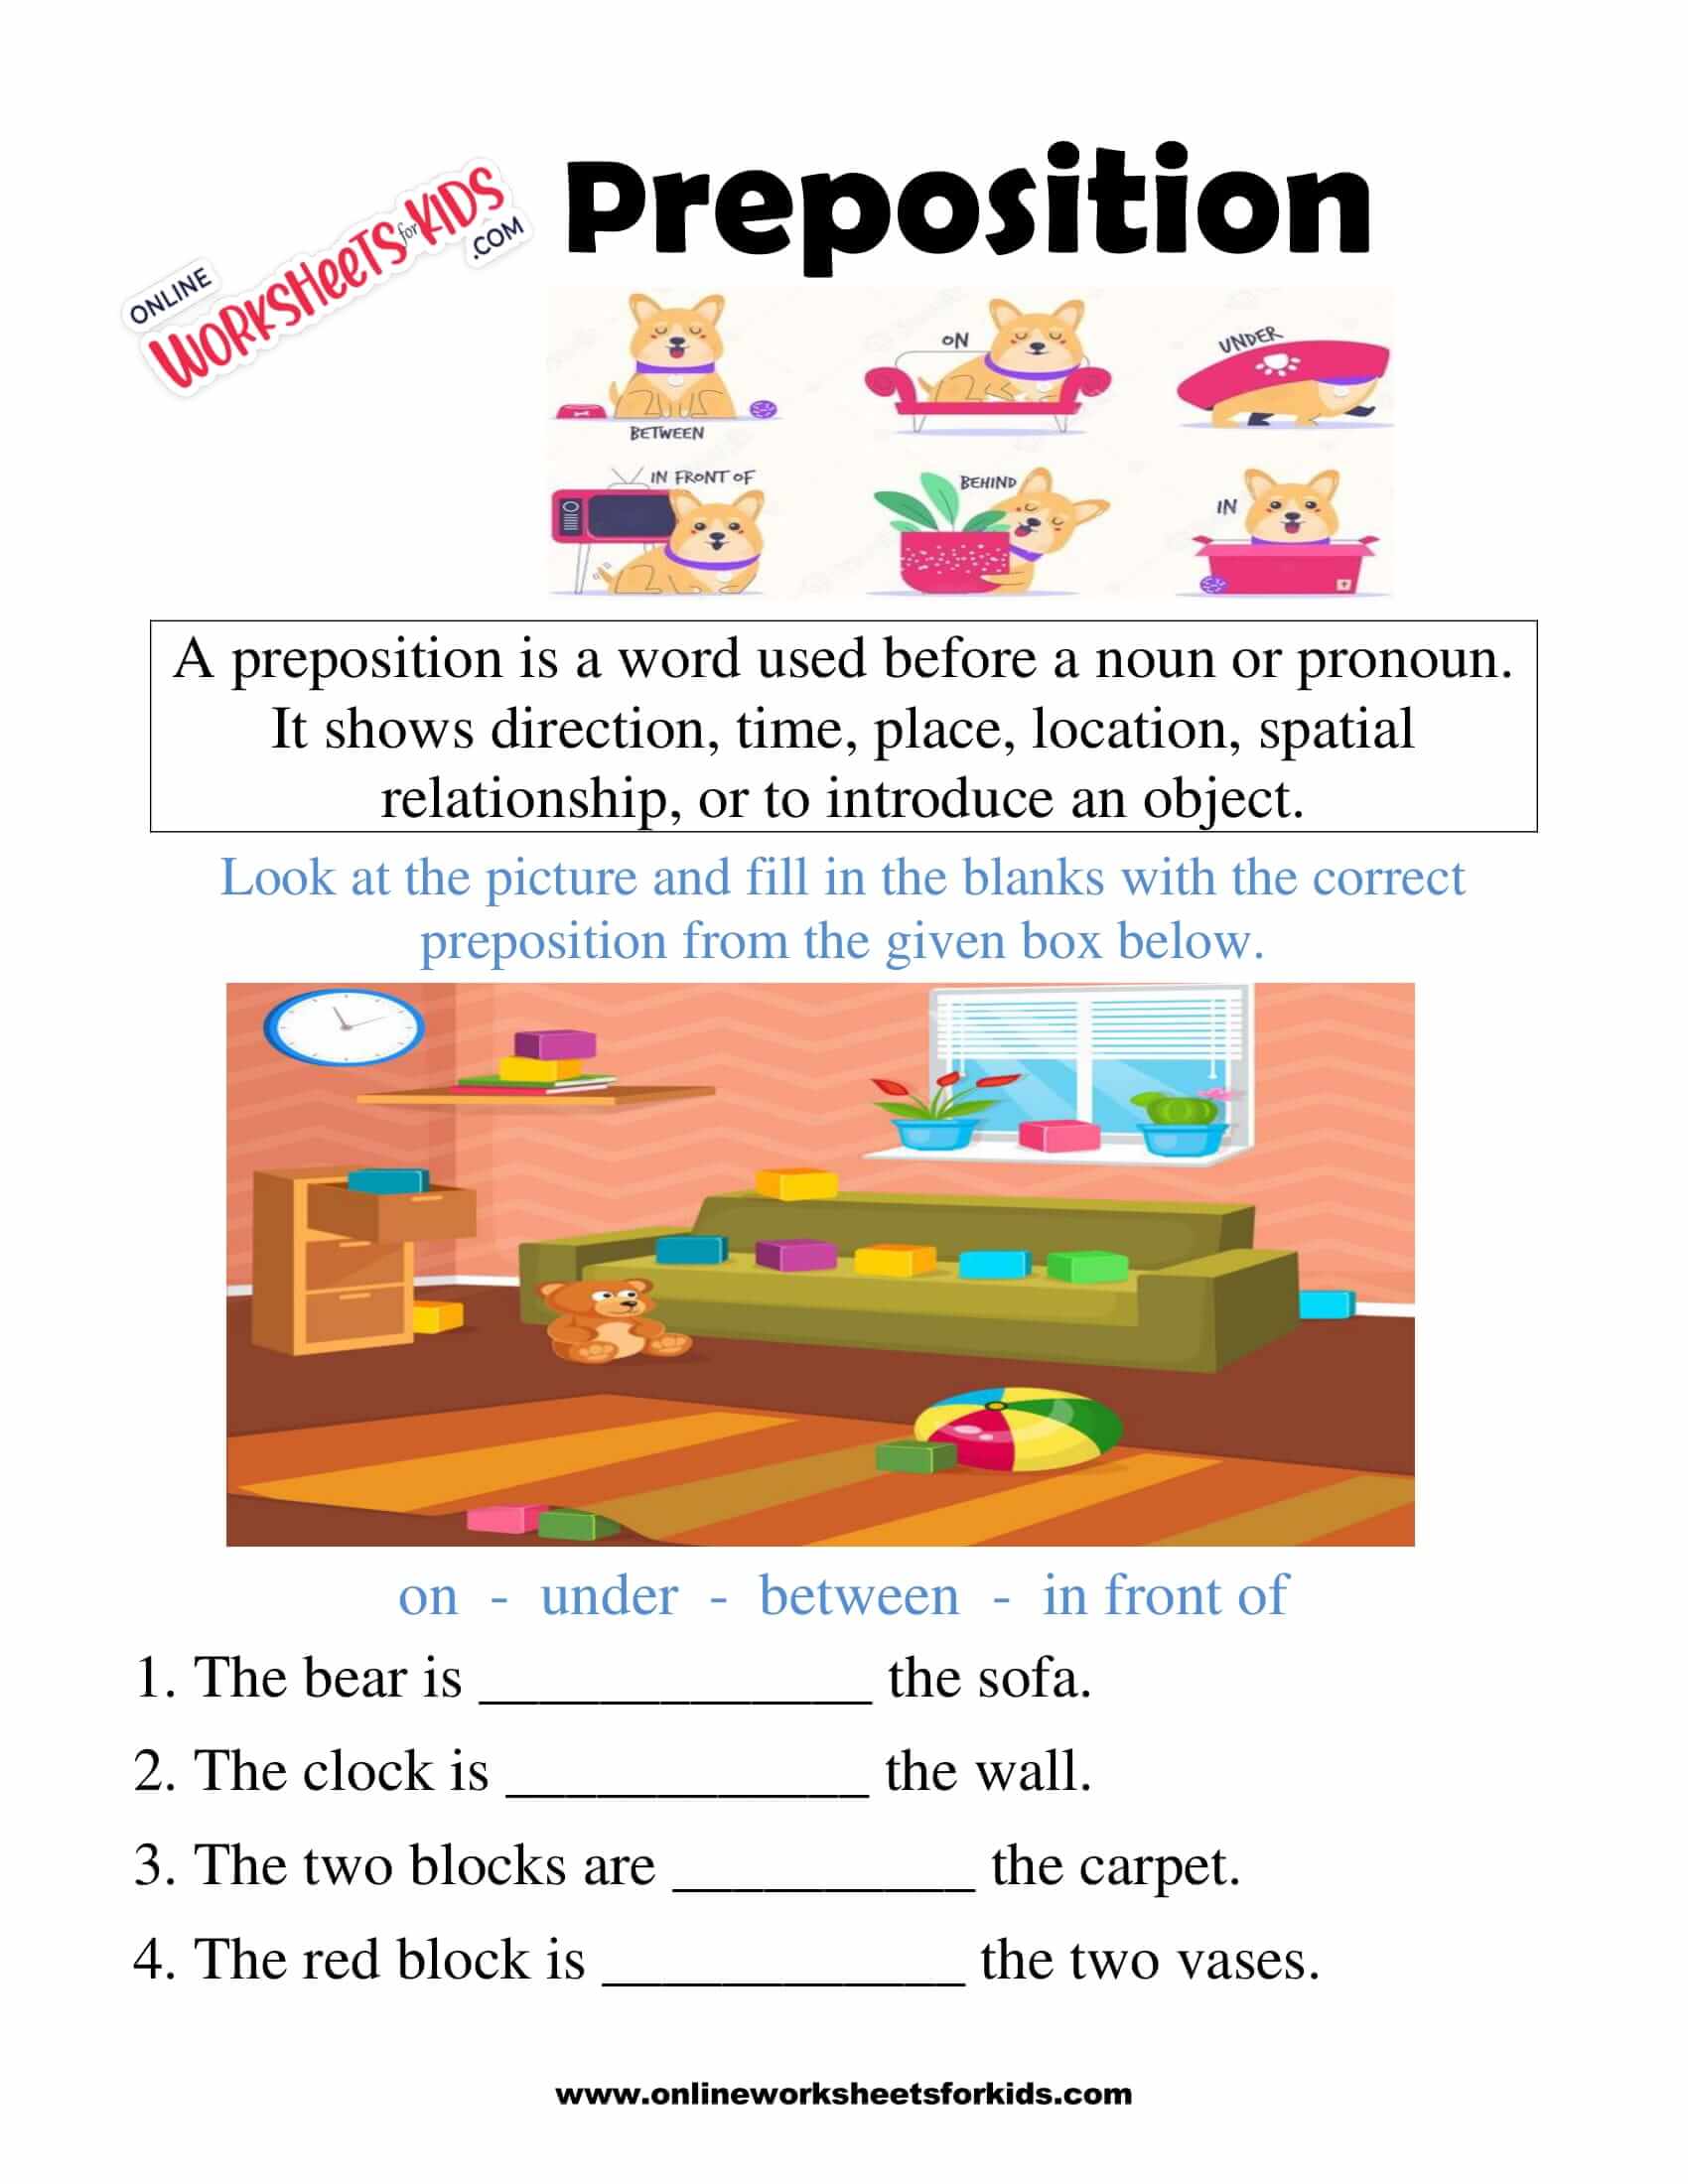 preposition-worksheets-for-grade-1-4